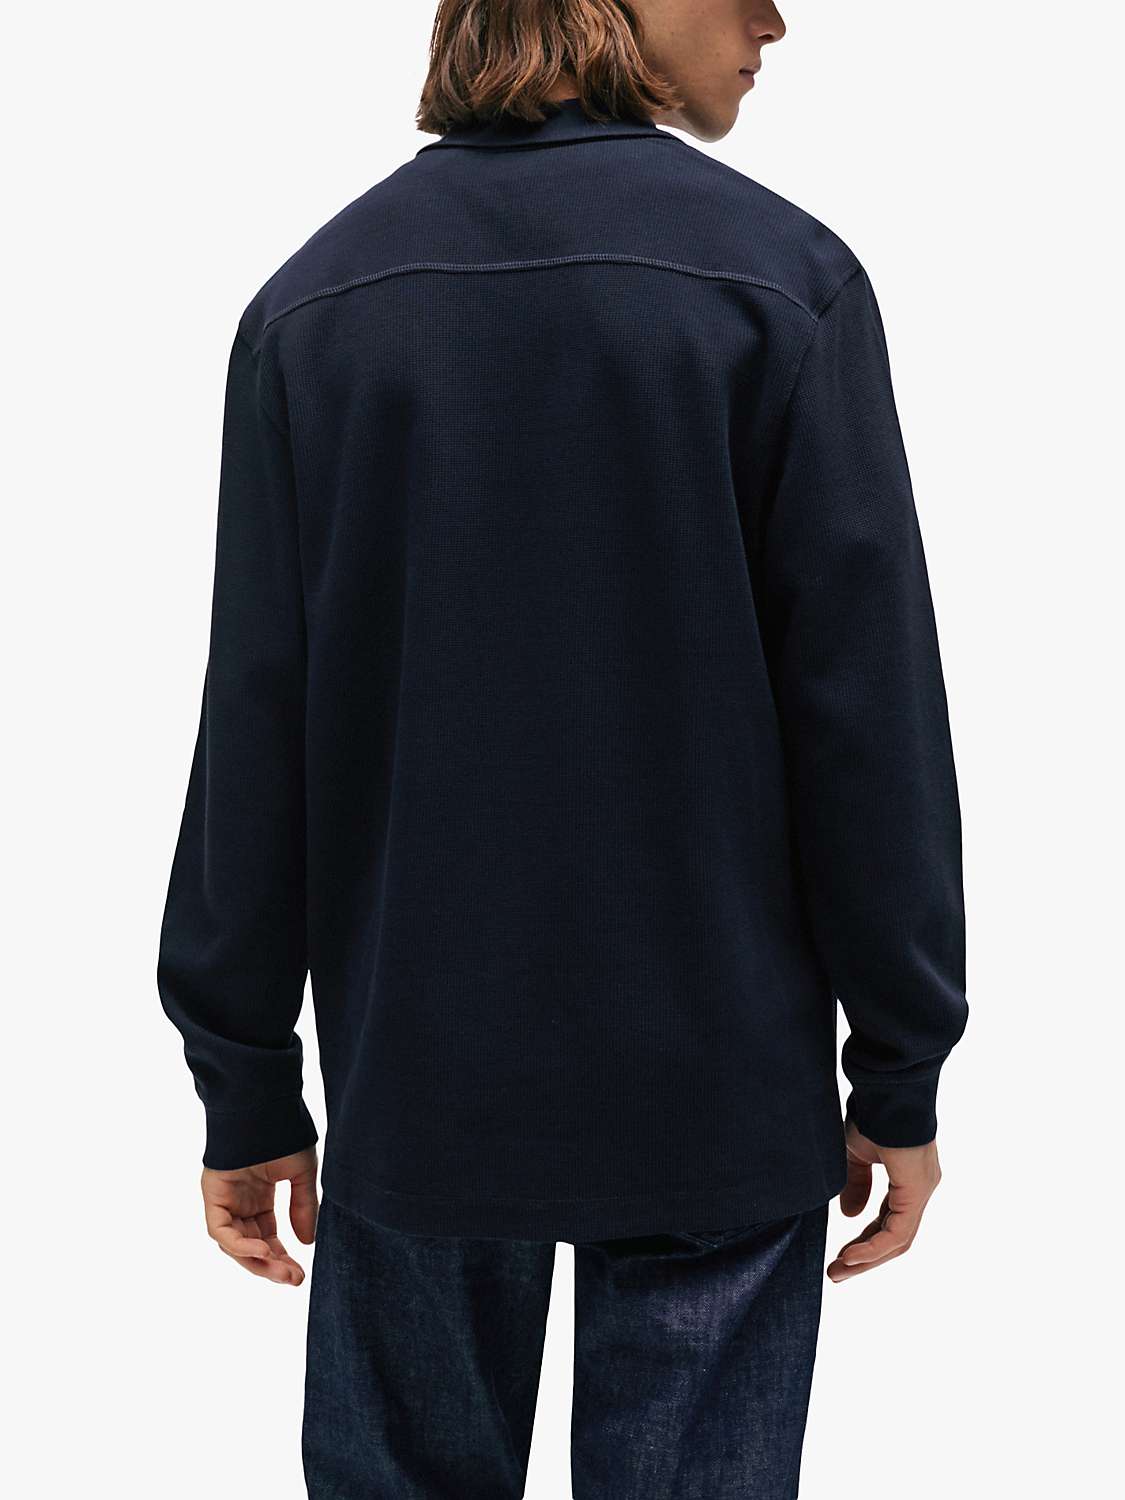 Buy BOSS Long Sleeved Polo Shirt, Dark Blue Online at johnlewis.com